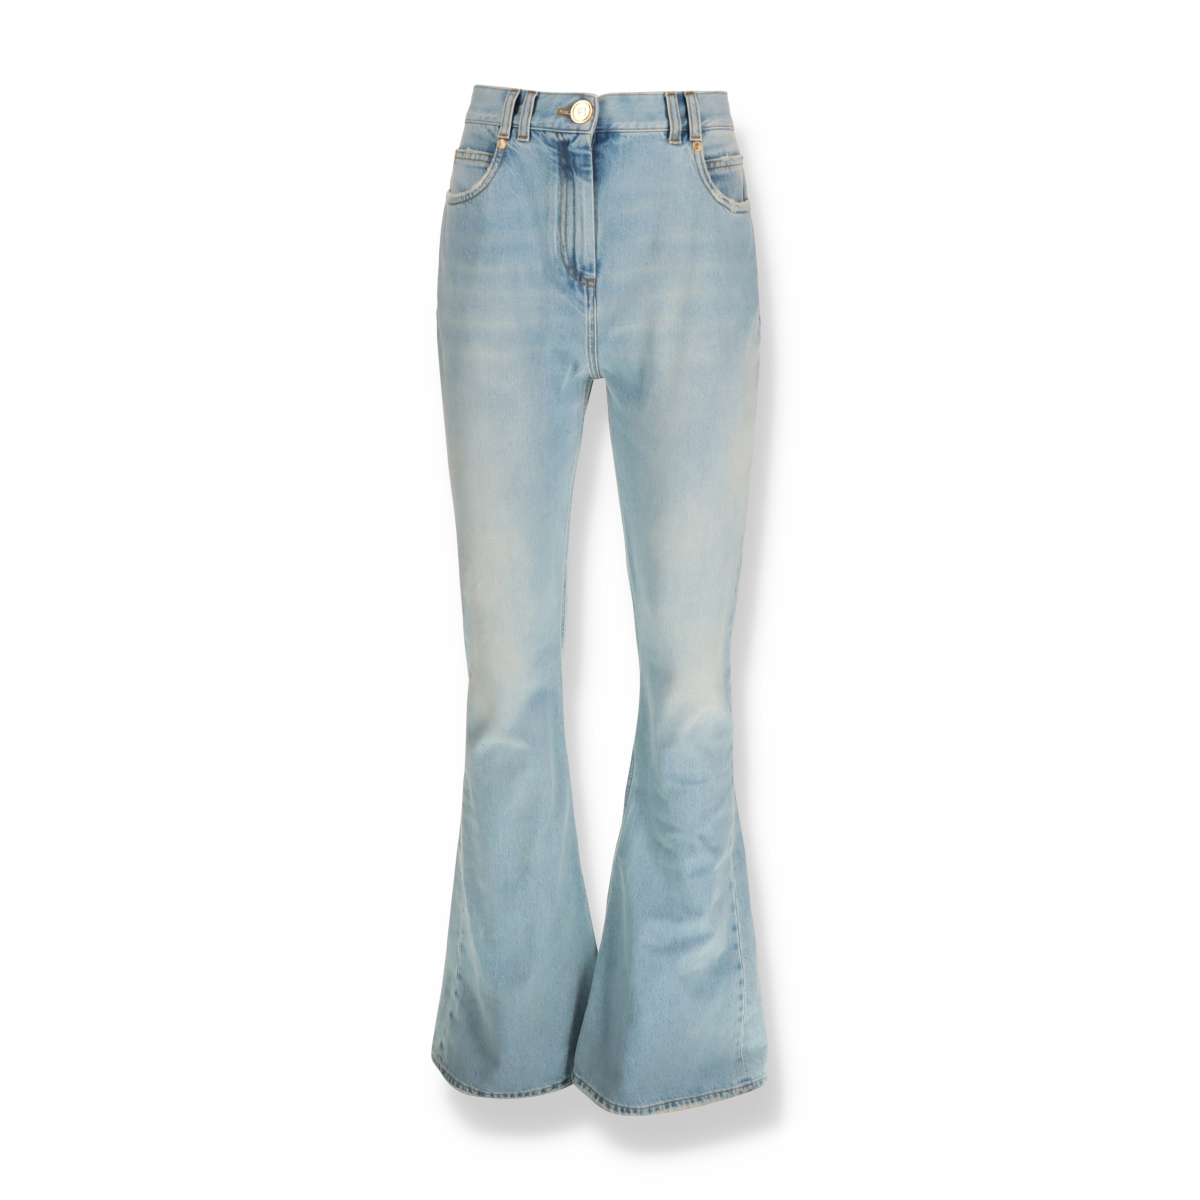 Balmain Bootcut Jeans